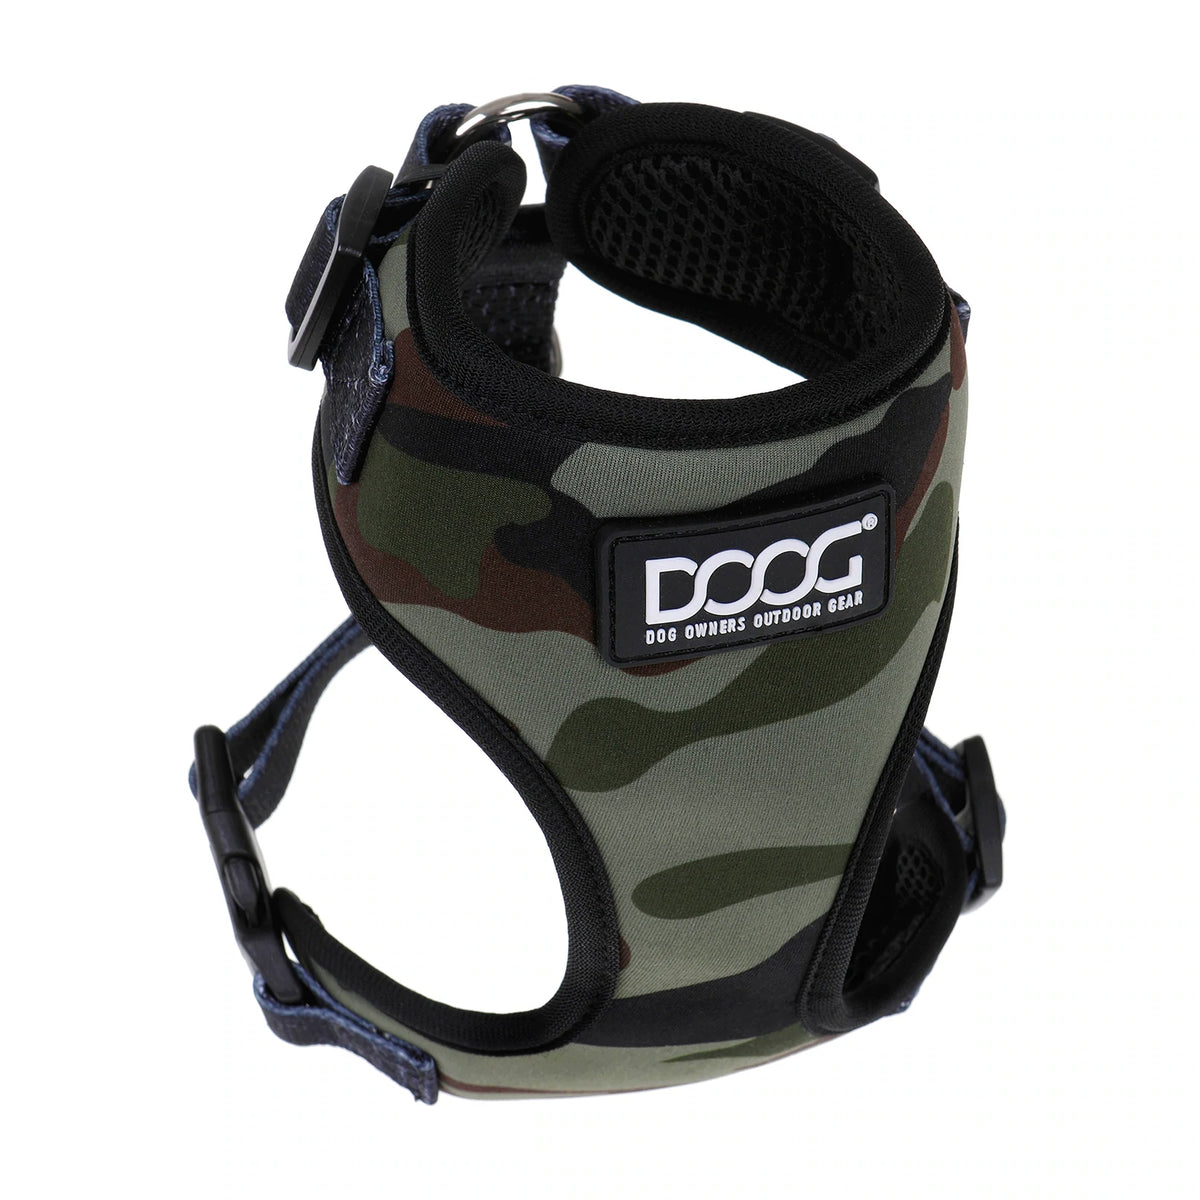 DOOG Neoflex Soft Harness - Assorted Patterns